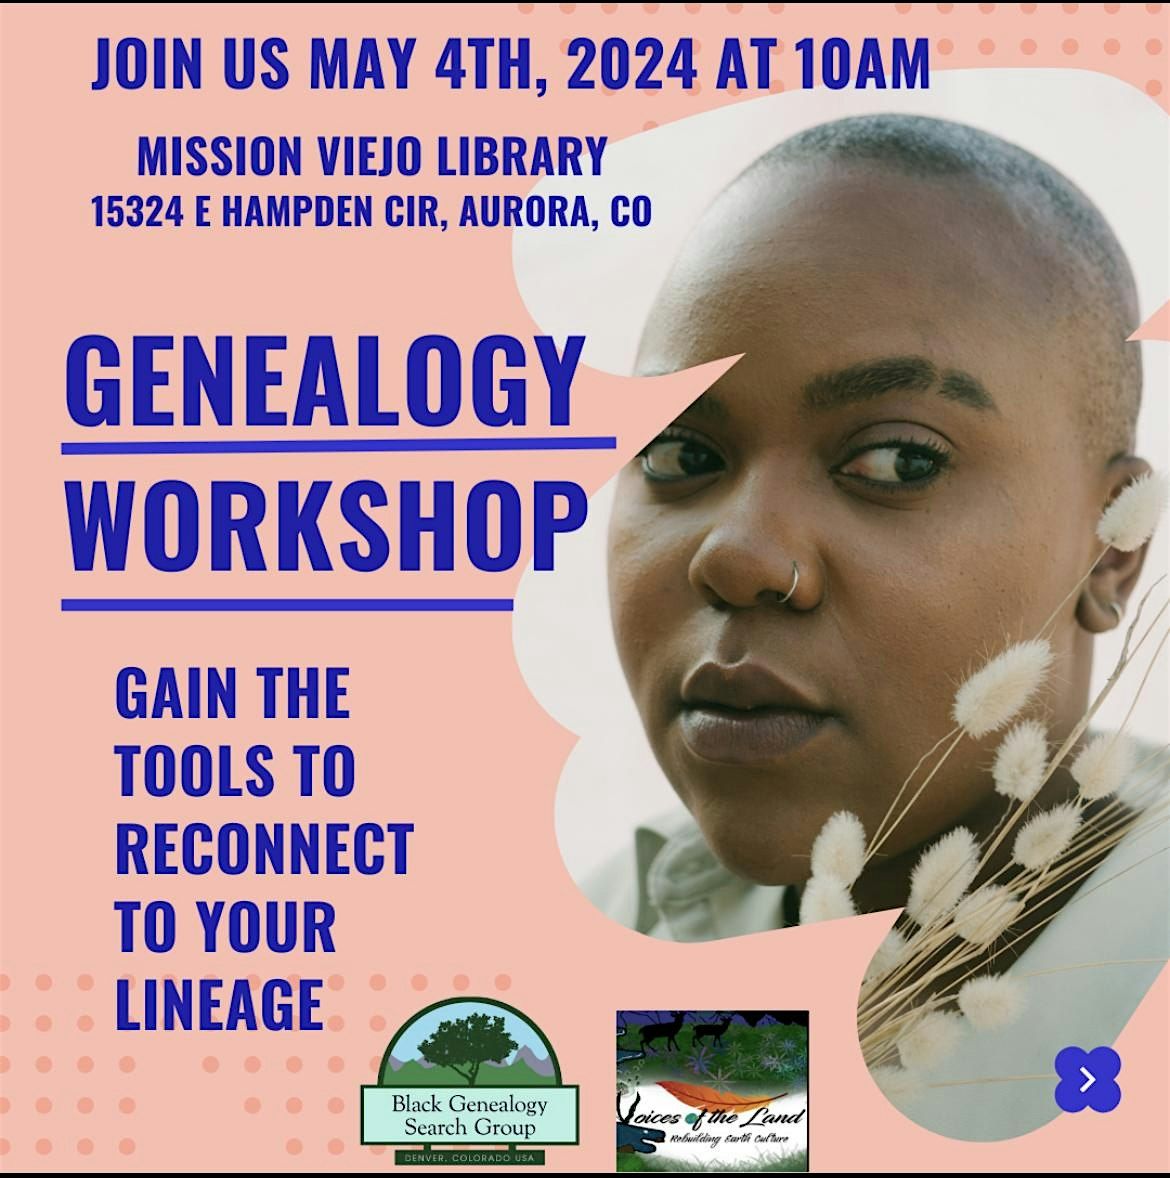 Genealogy Workshop